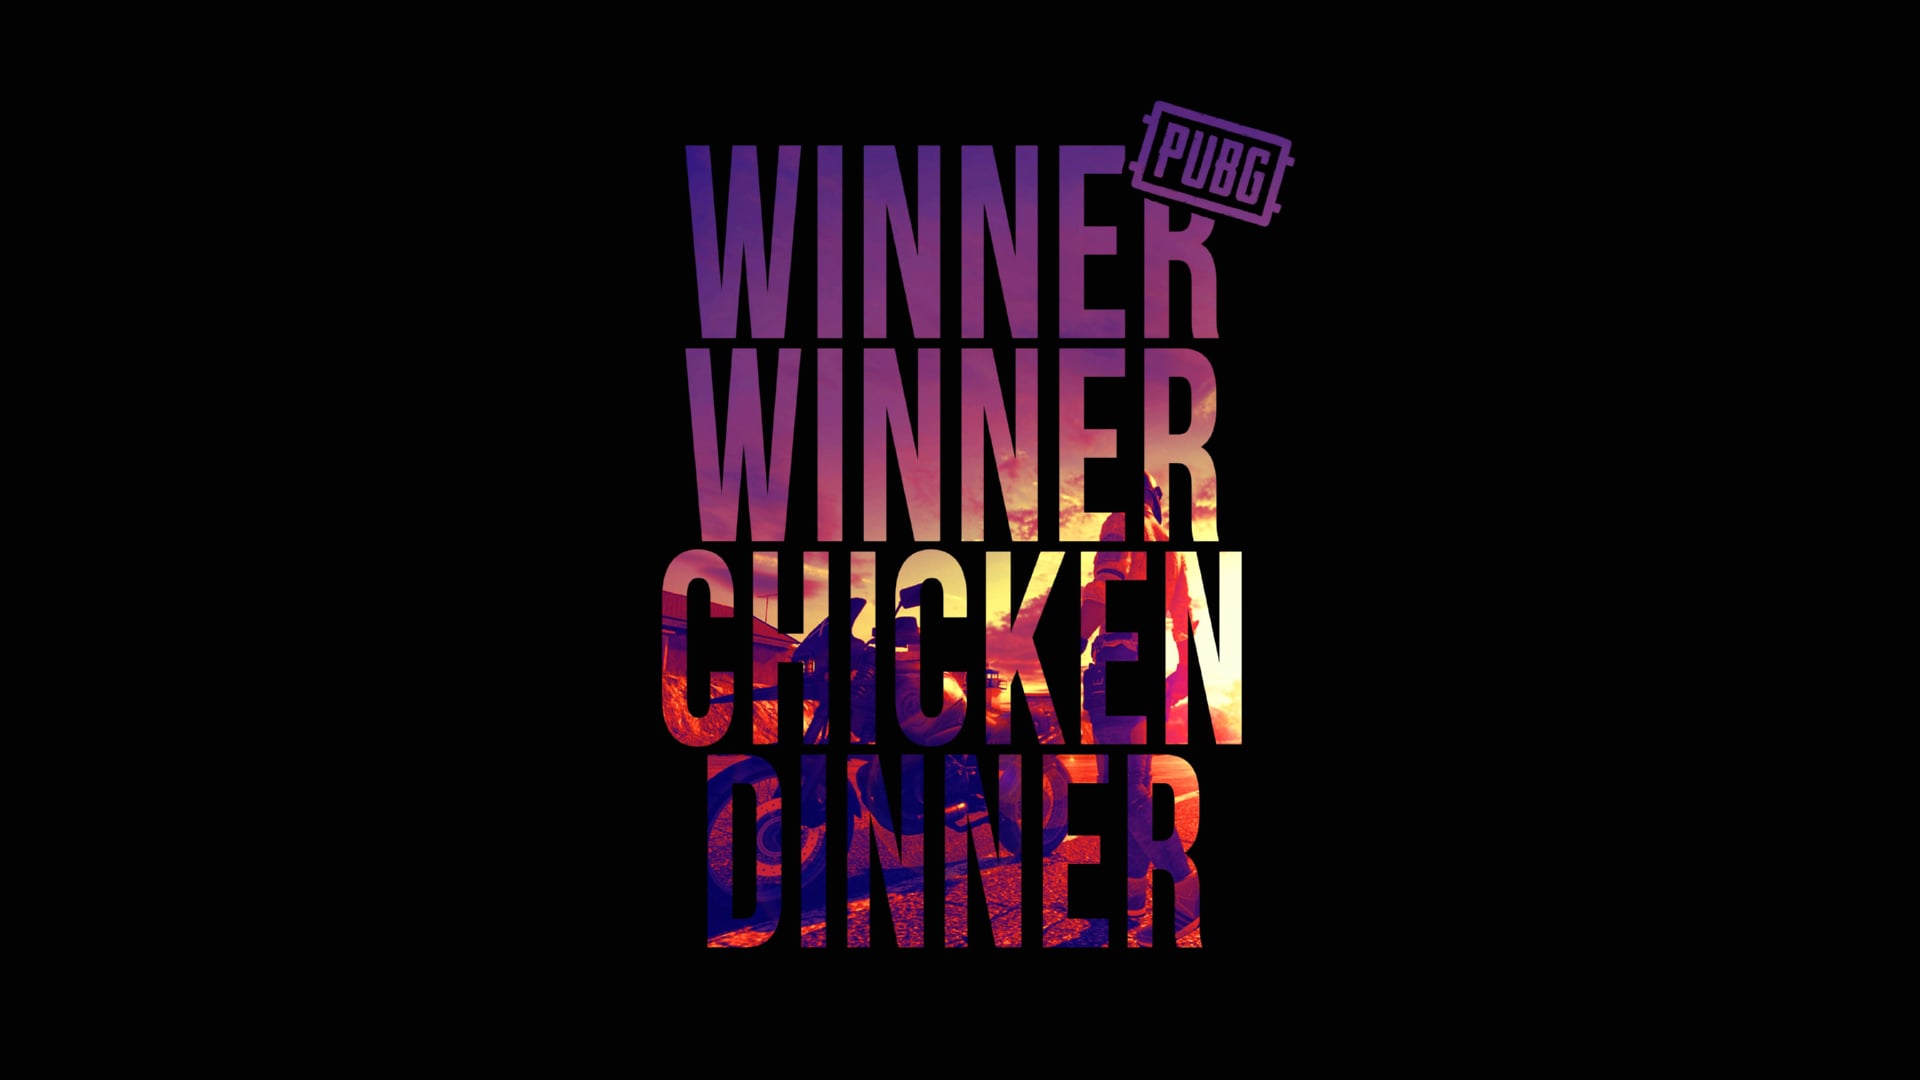 Winner Winner Chicken Dinner at 1280 x 960 size wallpapers HD quality